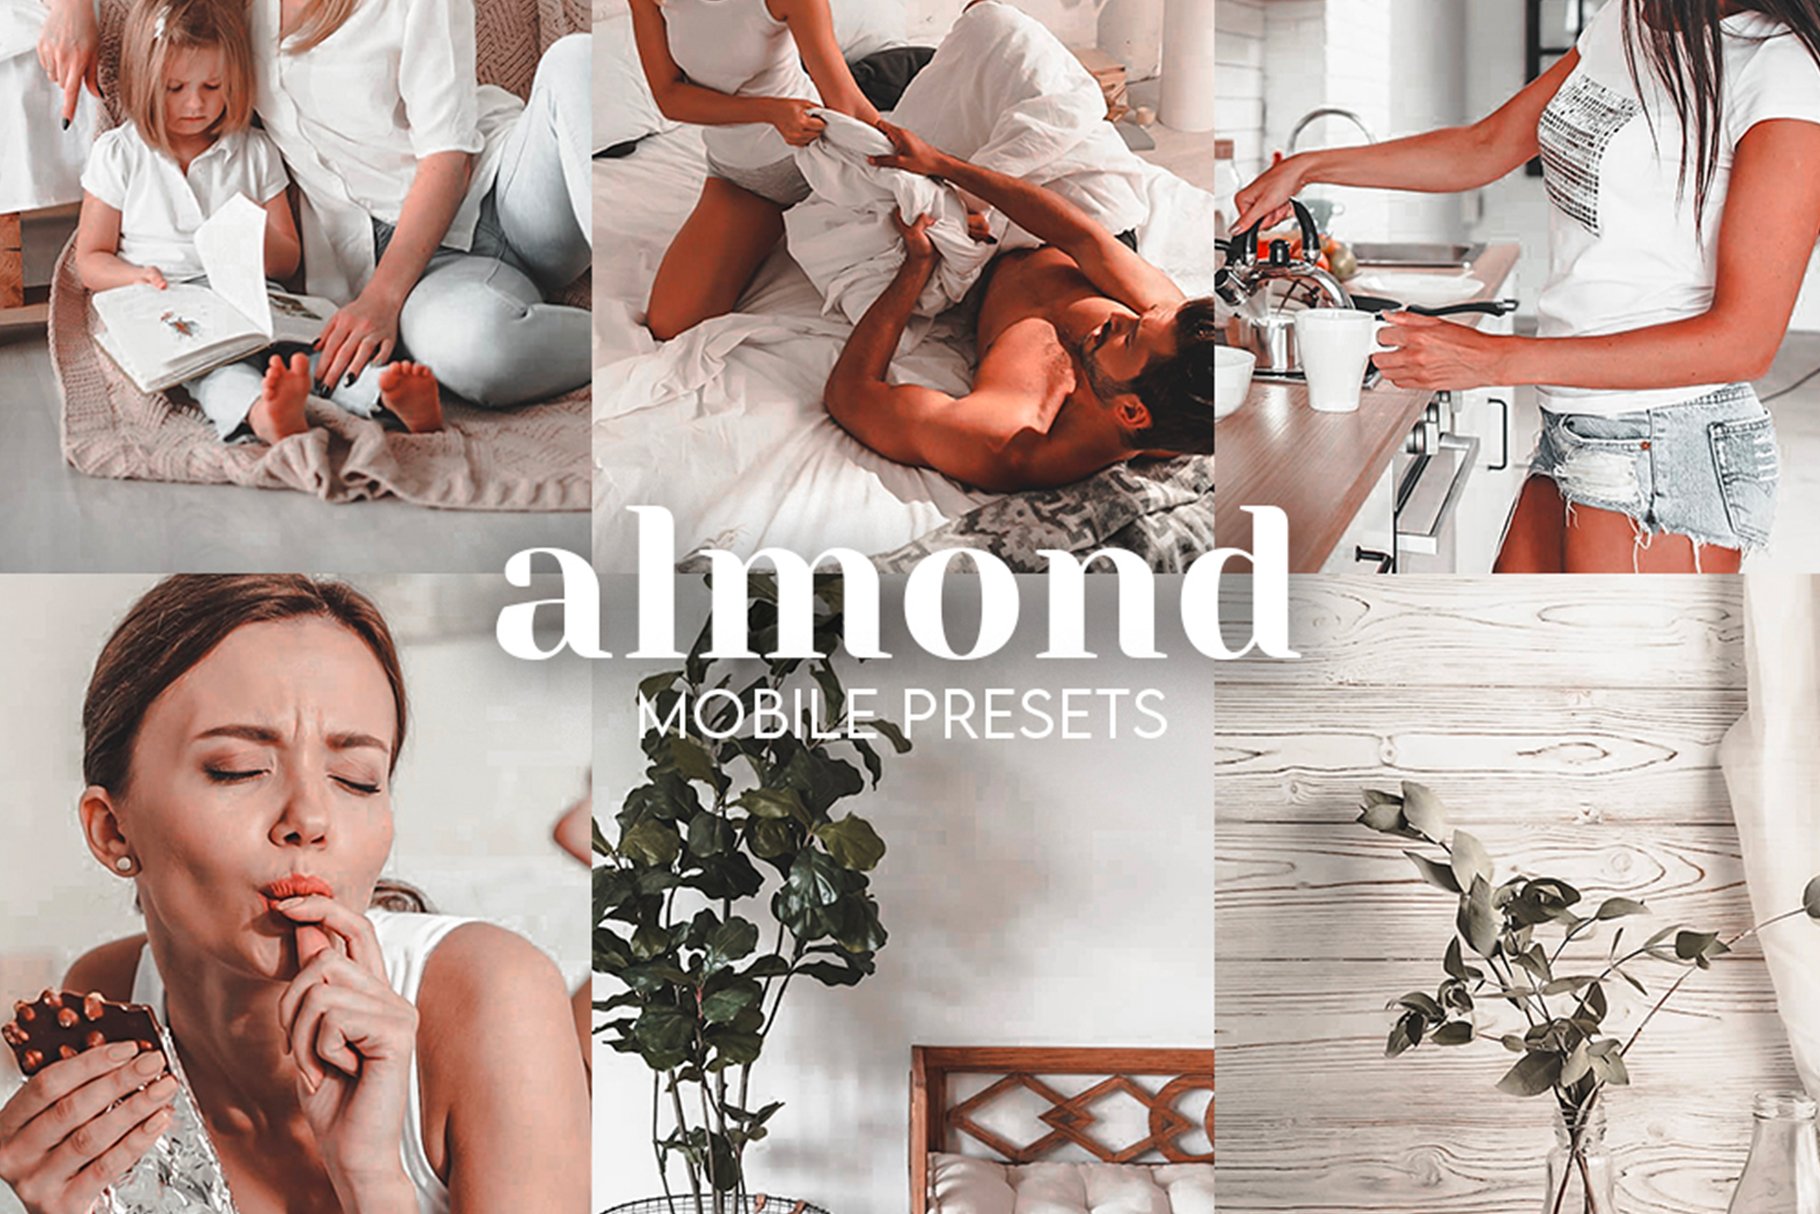 Almond Lightroom Mobile Presetscover image.